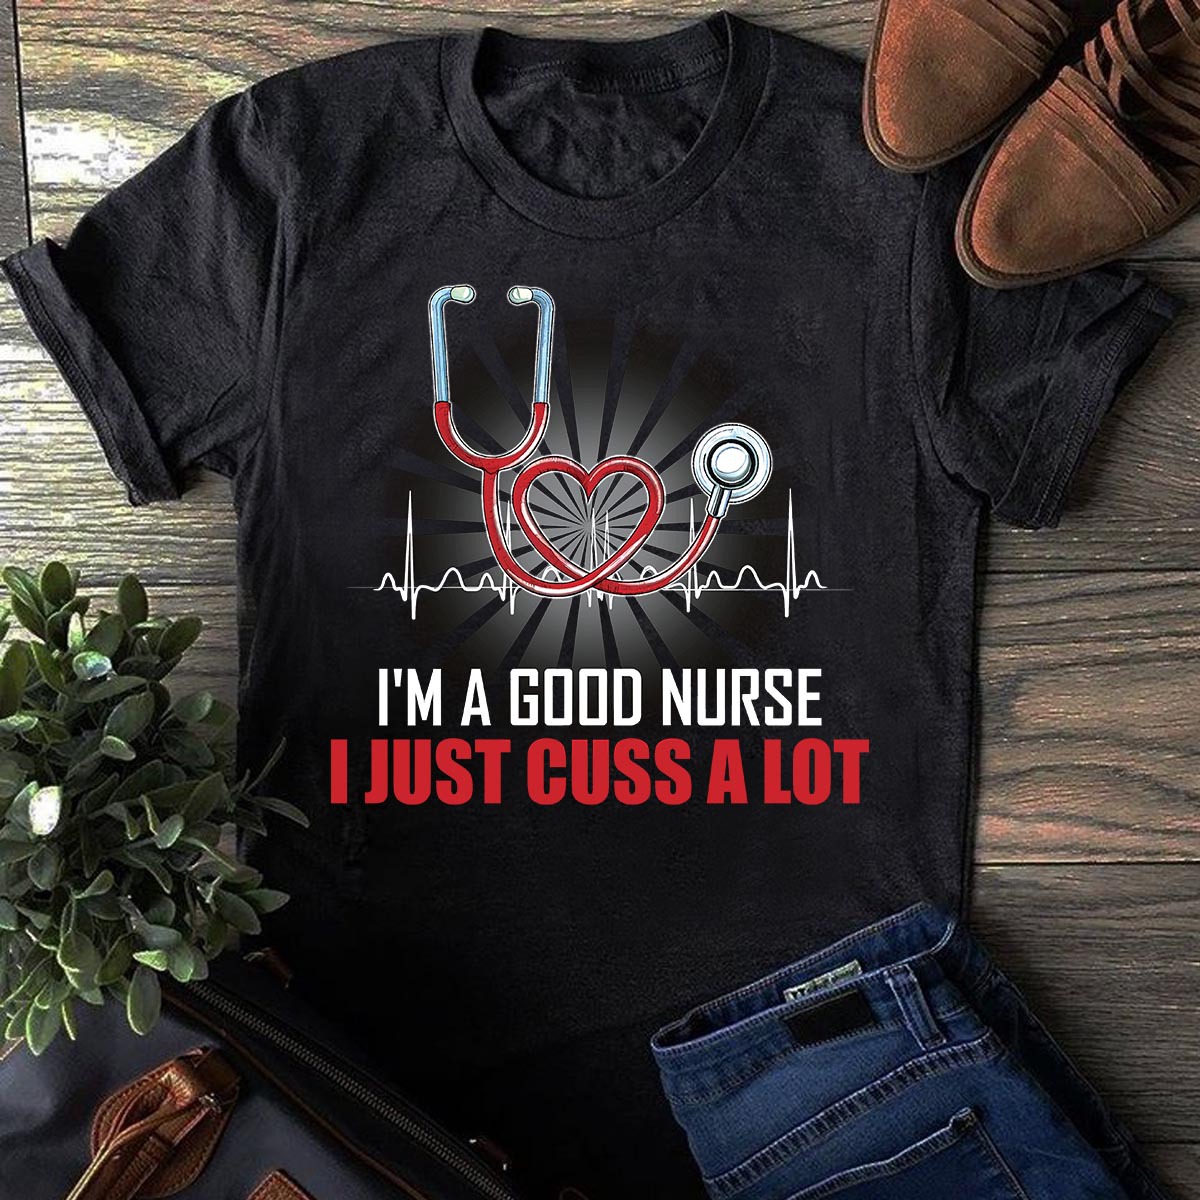 I'm a good nurse I just cuss a lot - Nurse the job